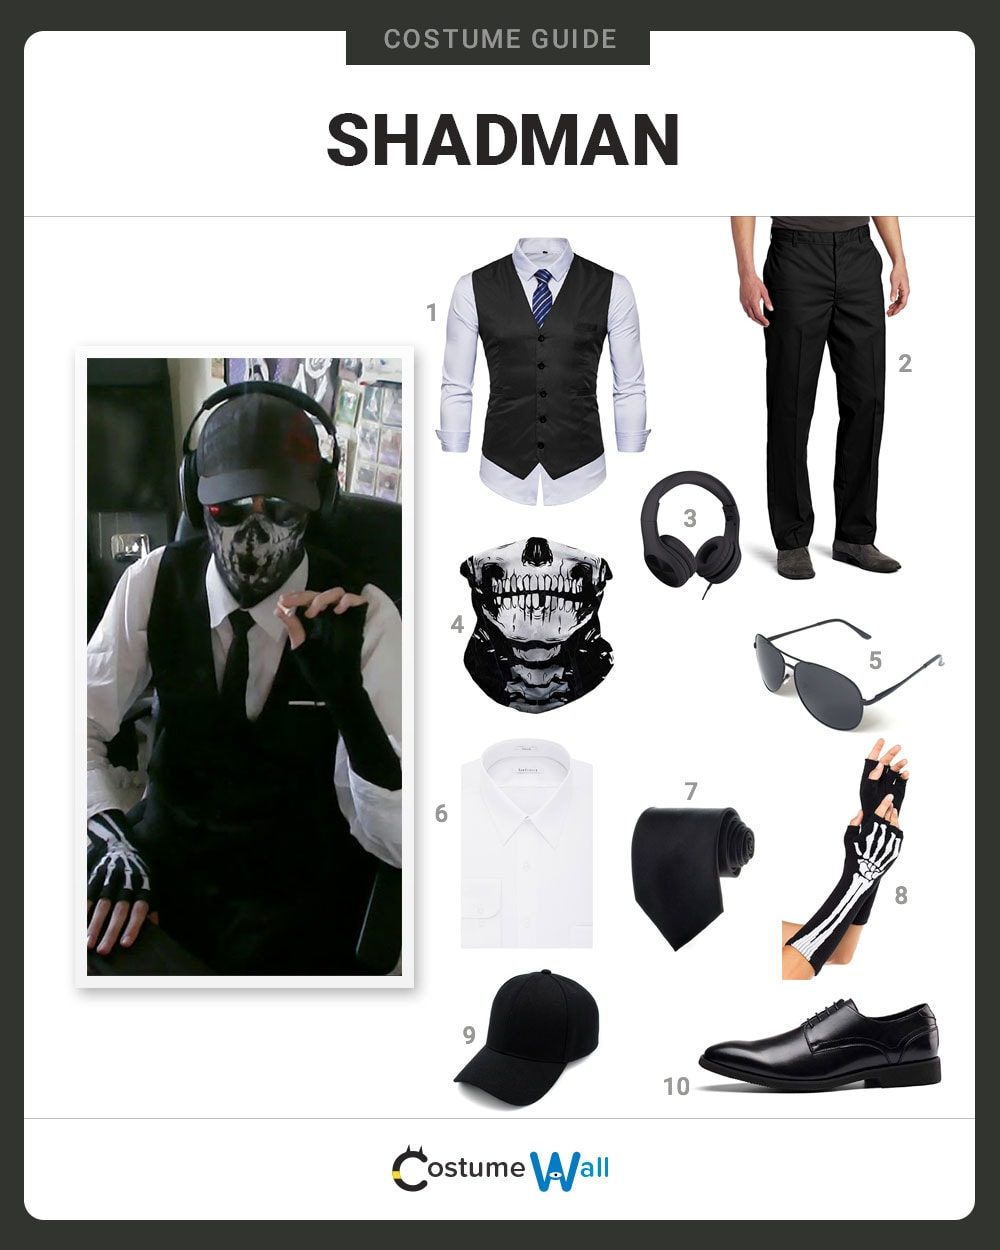 Shadman Costume Guide